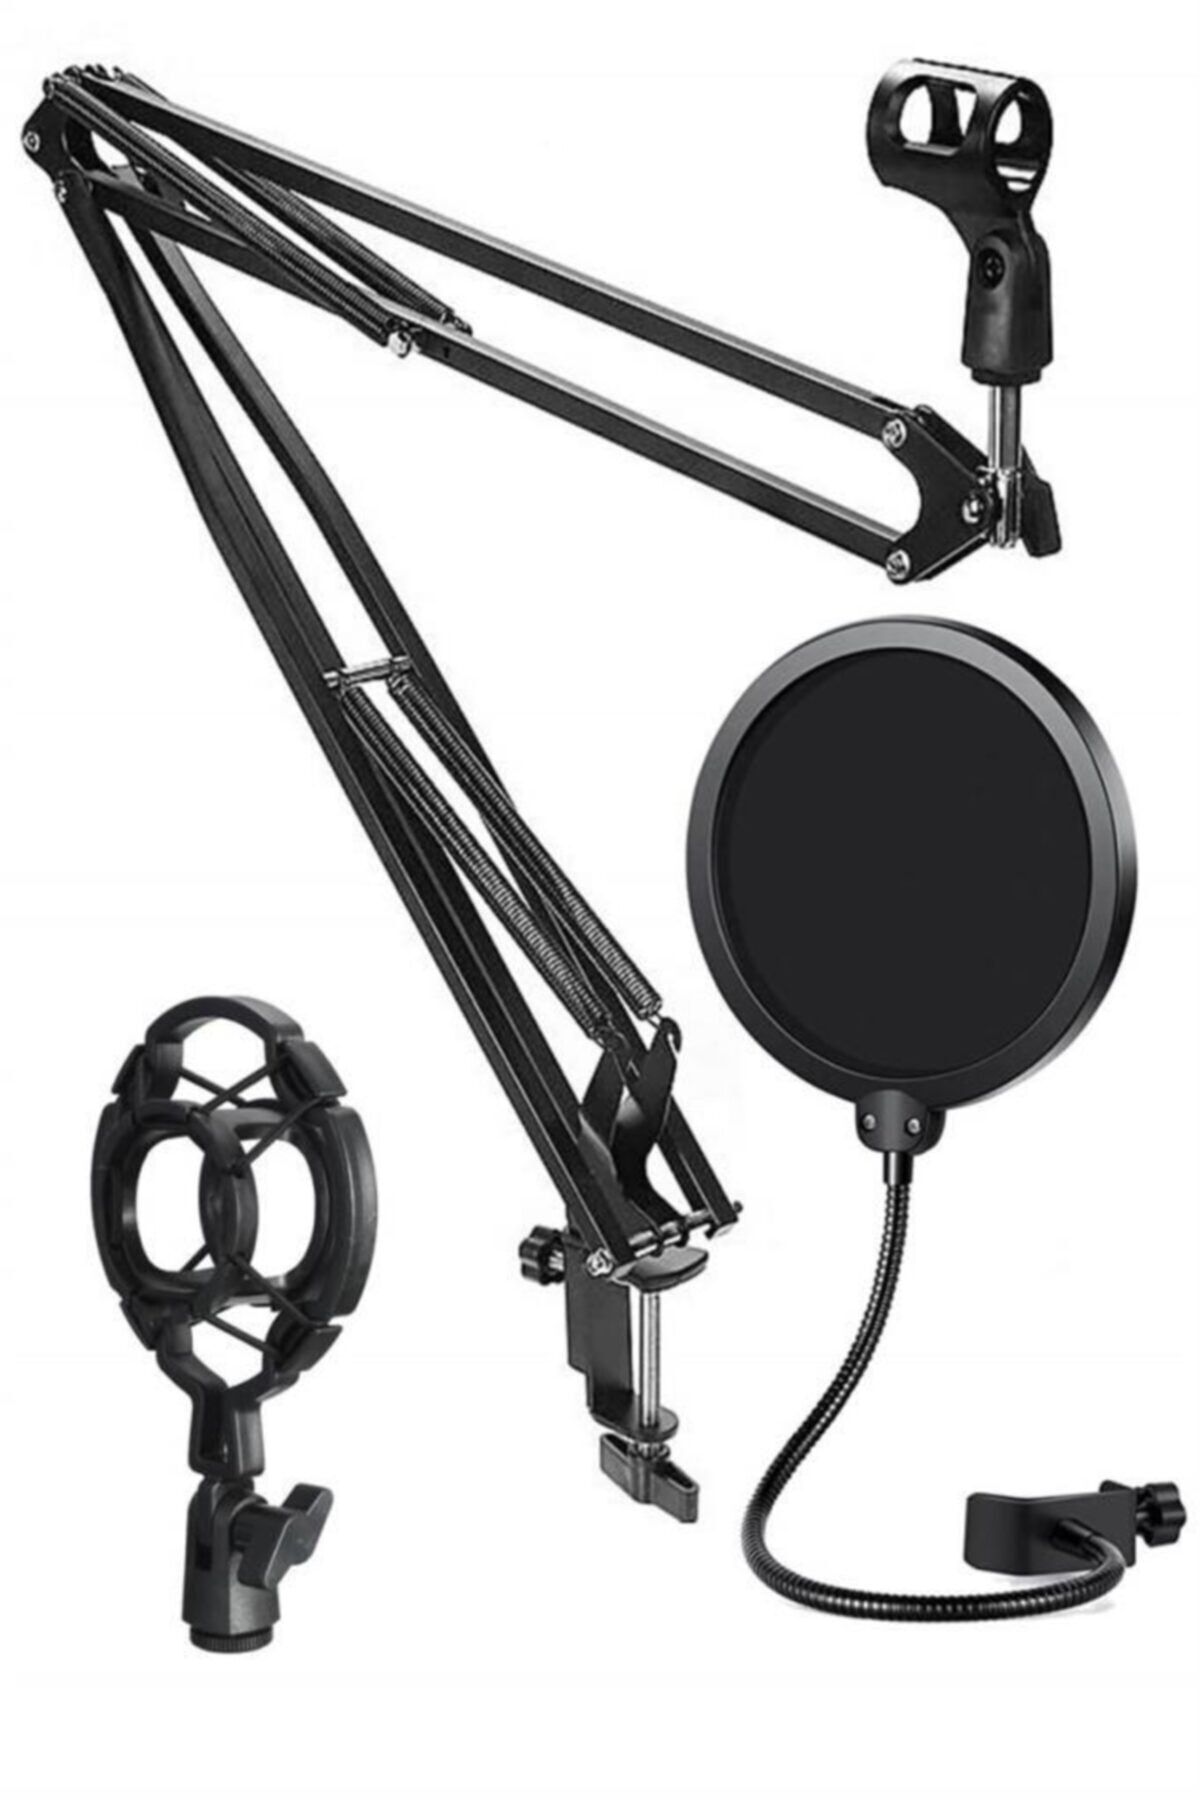 Lastvoice Nb40hyp Set Stüdyo Mikrofon Için Stand Shock Mount Filtre (50X50 BÜYÜK BOY)